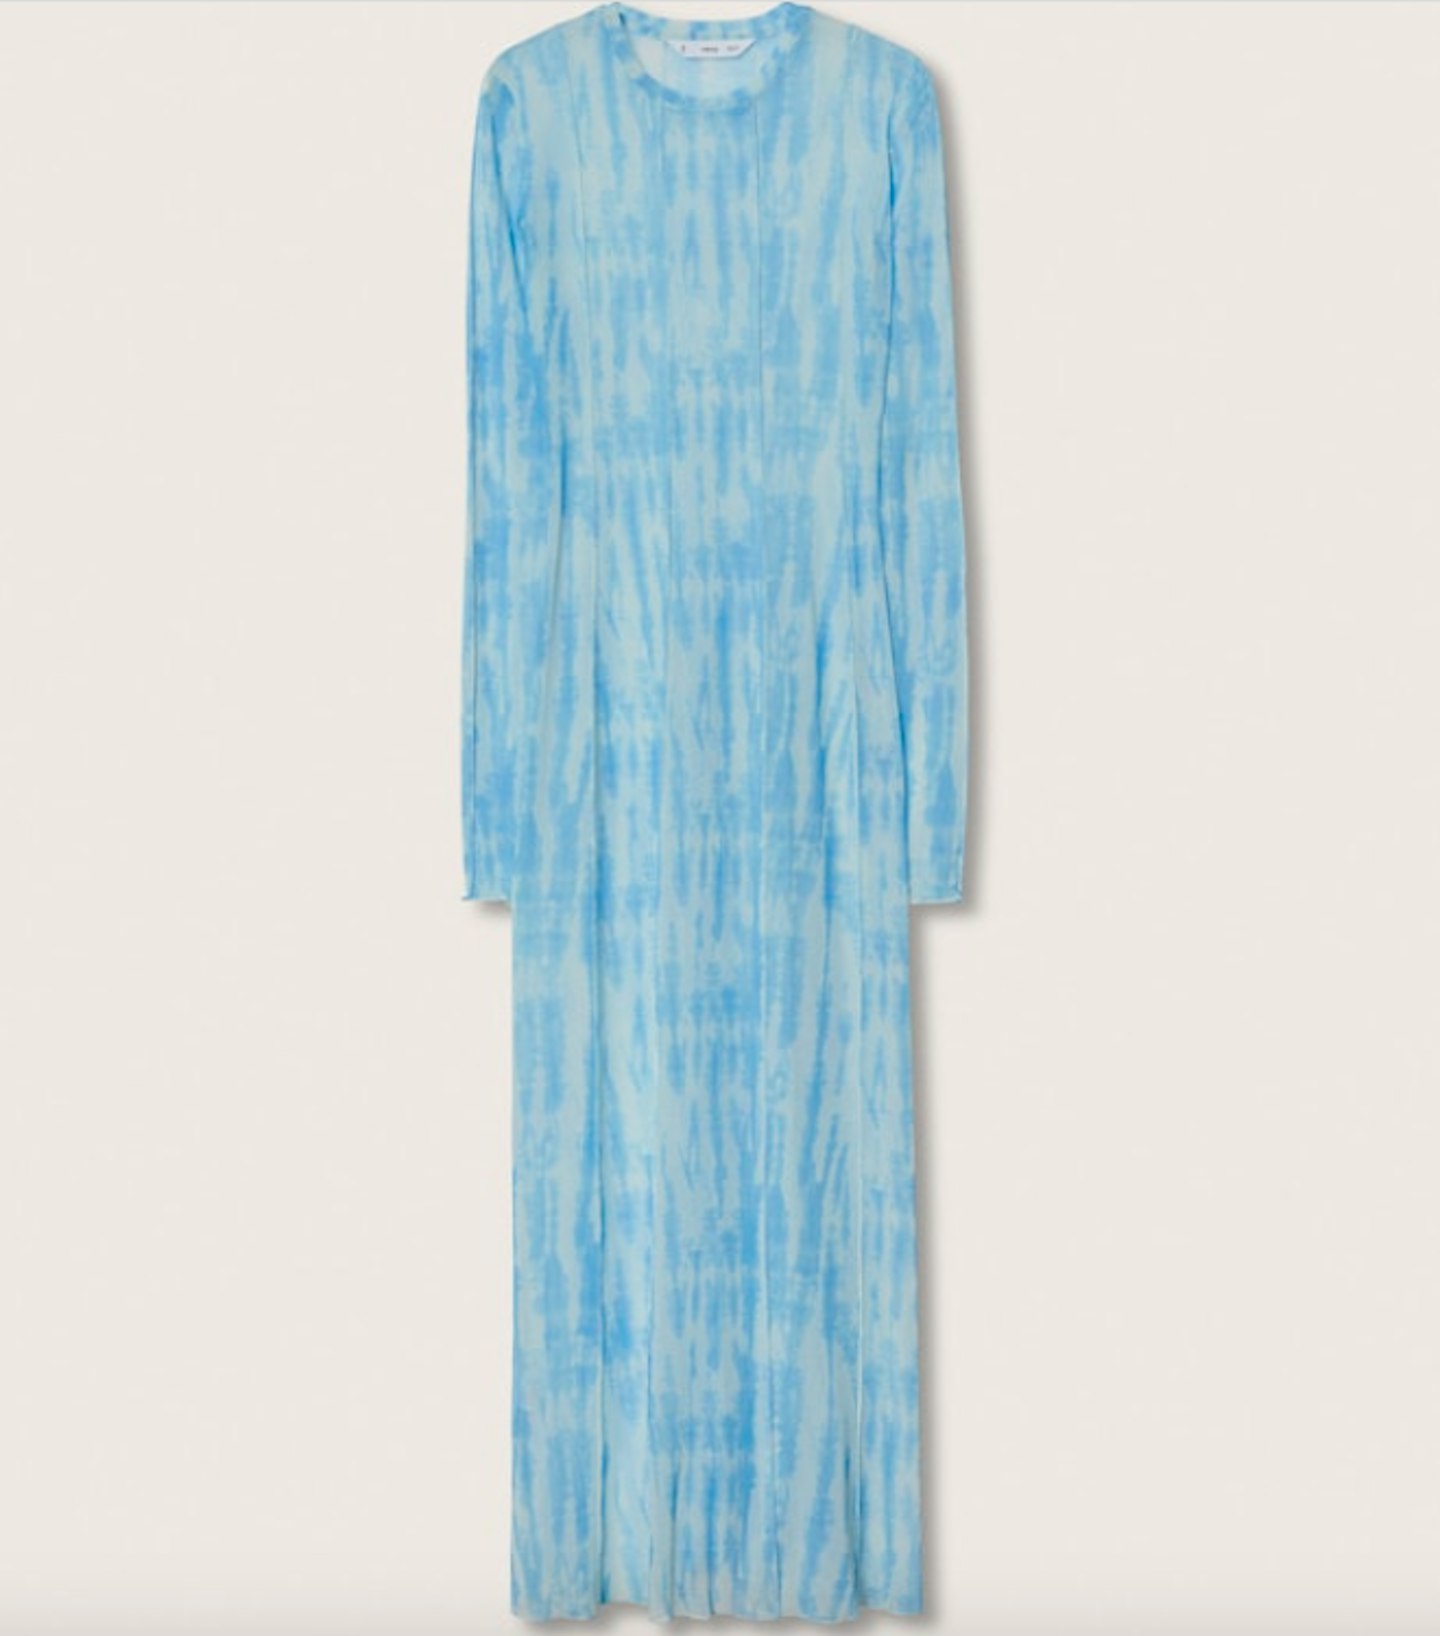 Mango, Seam Printed Dress, £49.99